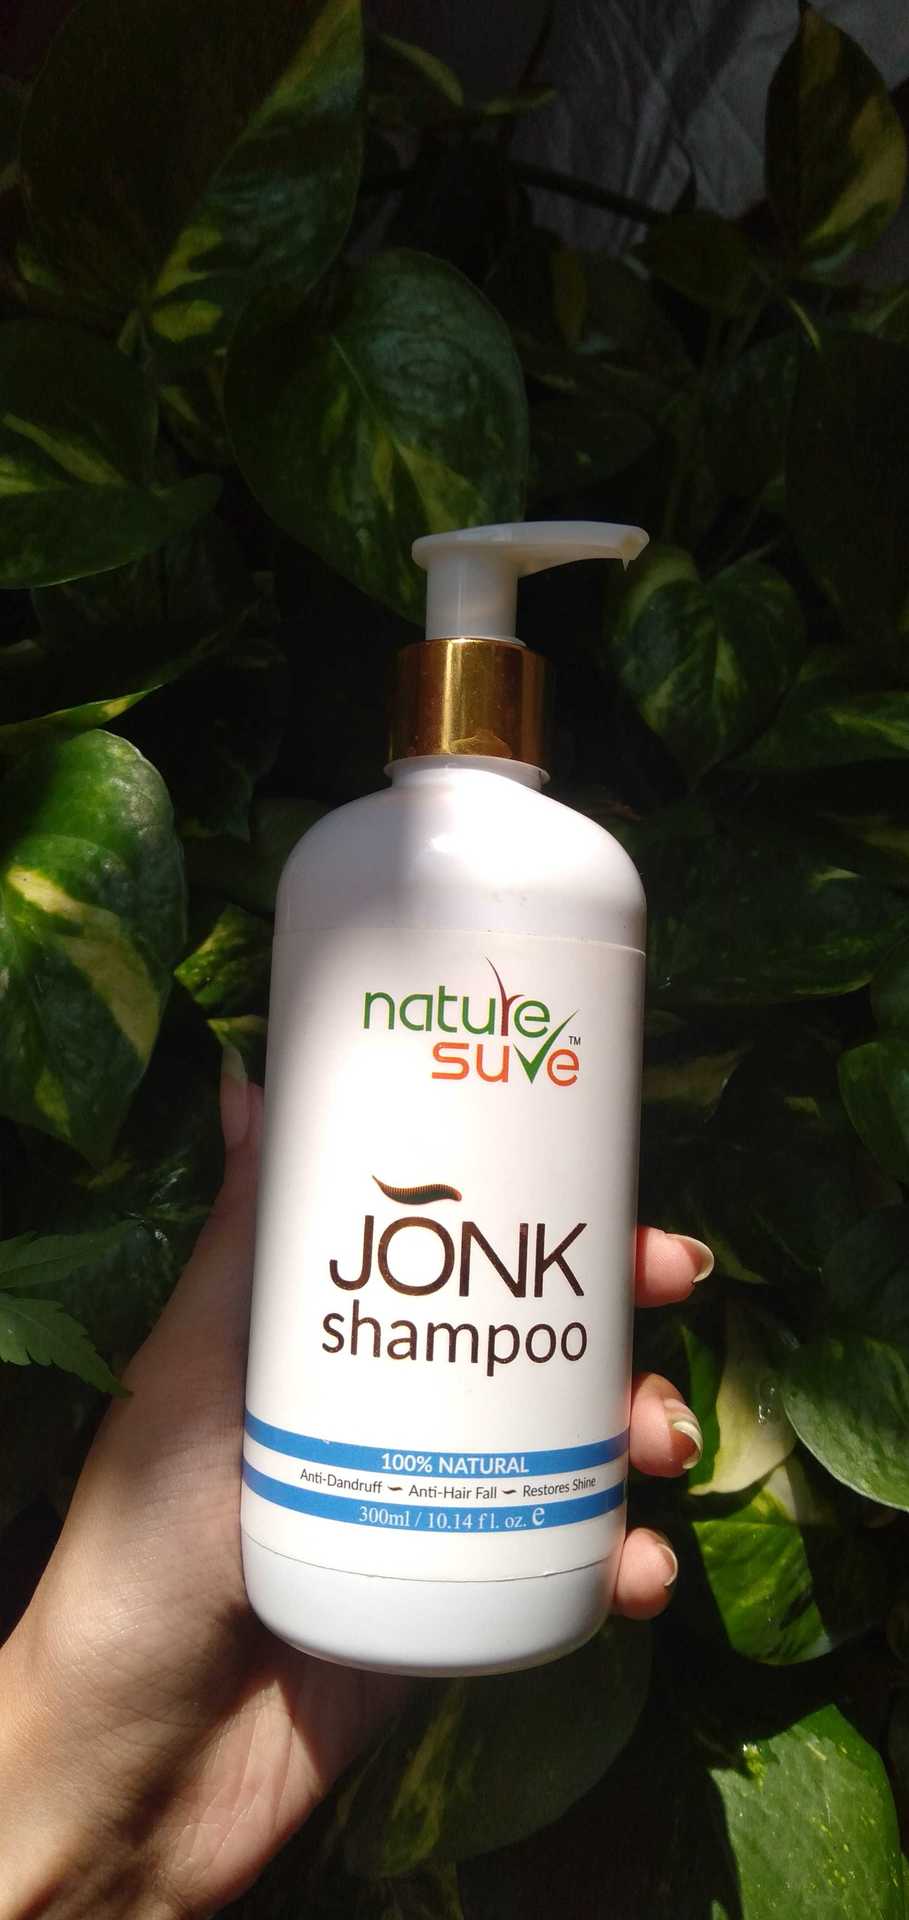 Nature Sure's -Jonk shampoo image